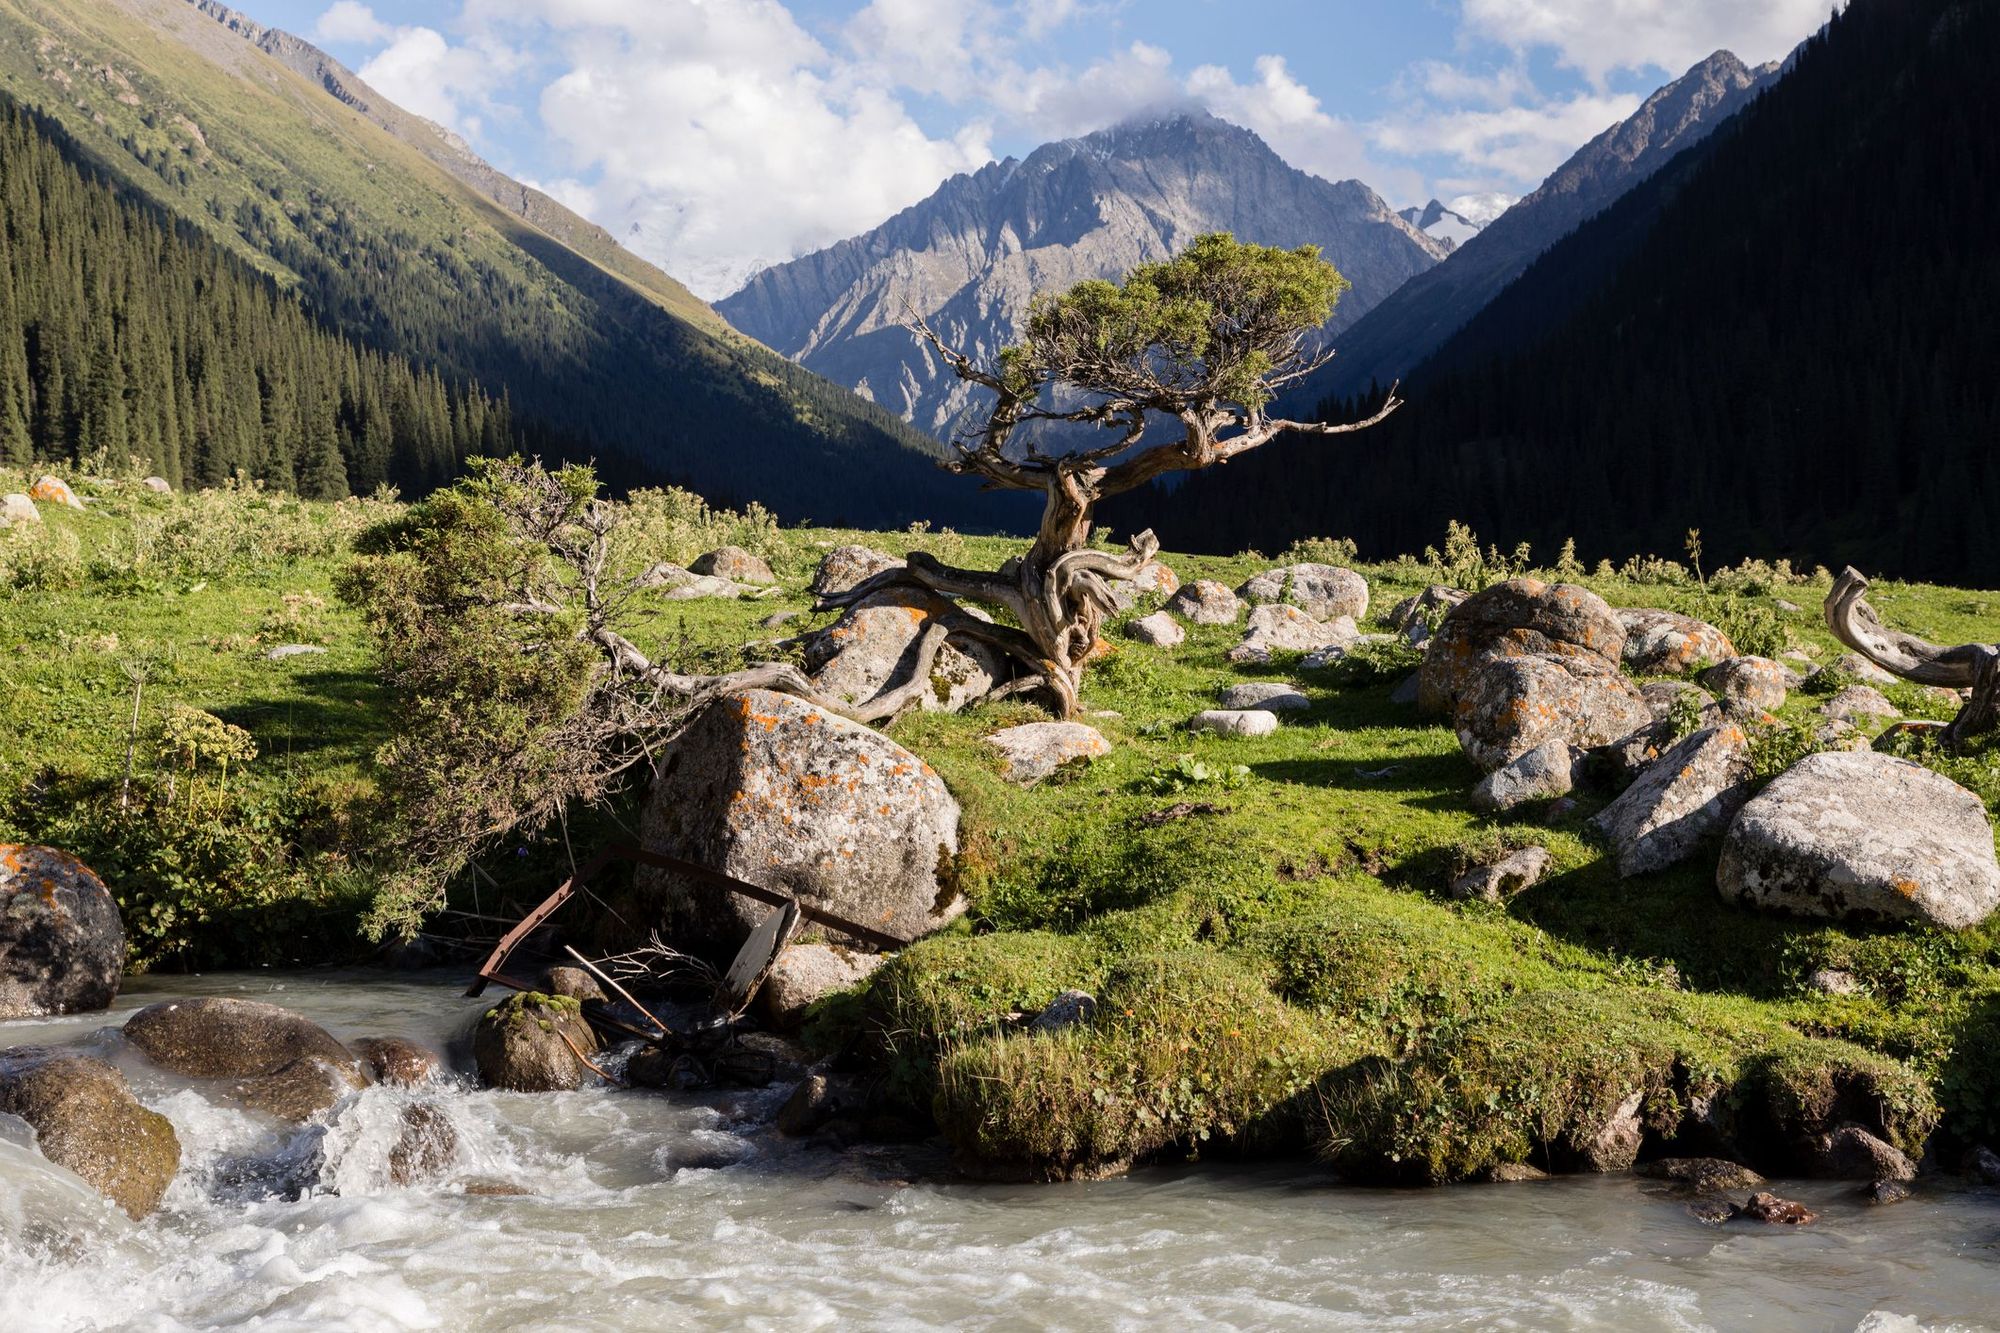 The Altyn-Arashan hot spring river in Kyrgyzstan